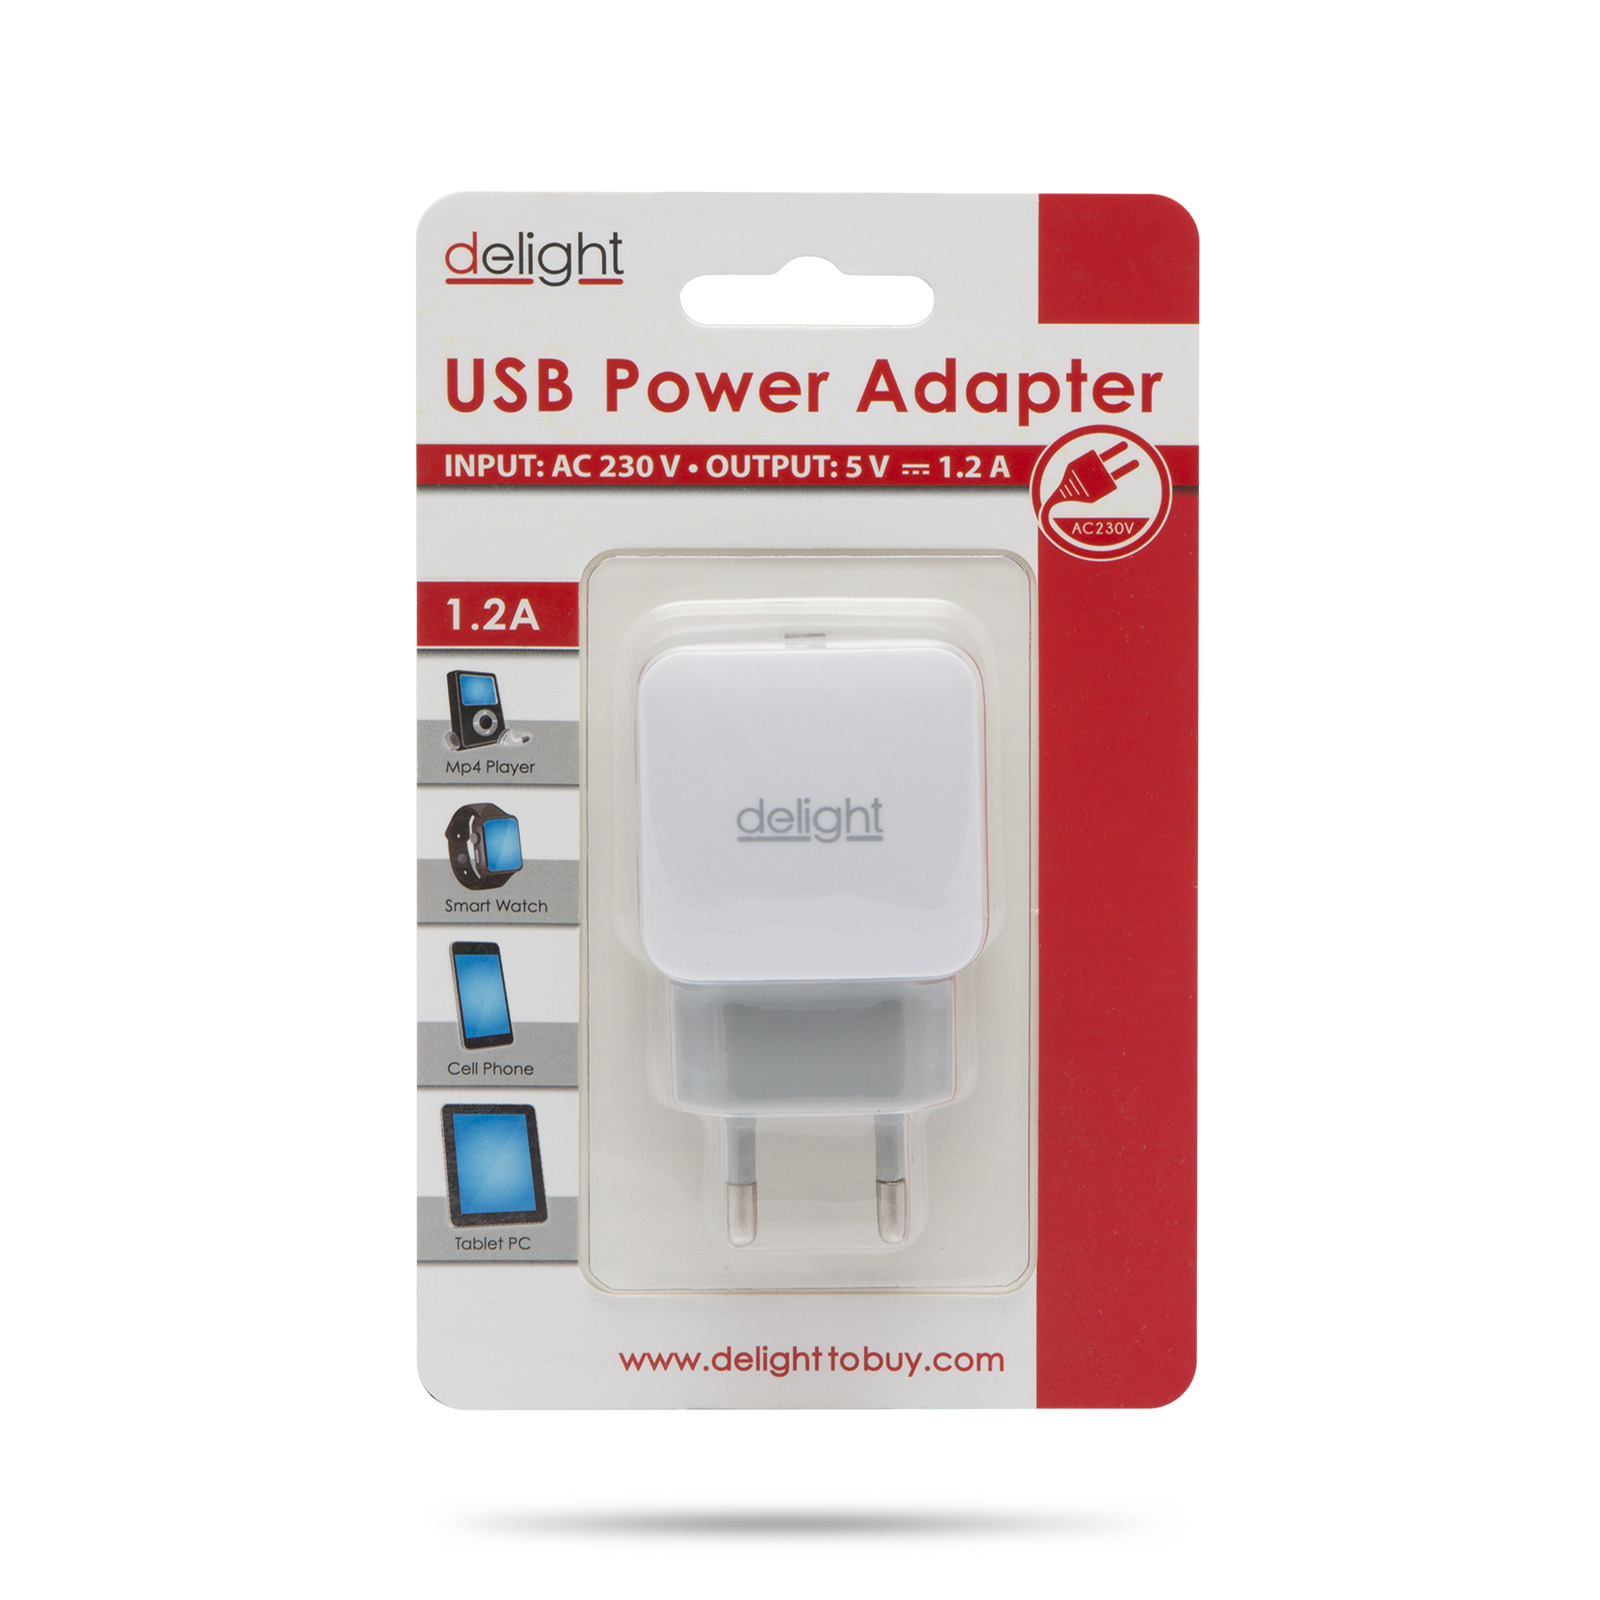 USB Power Adapter thumb